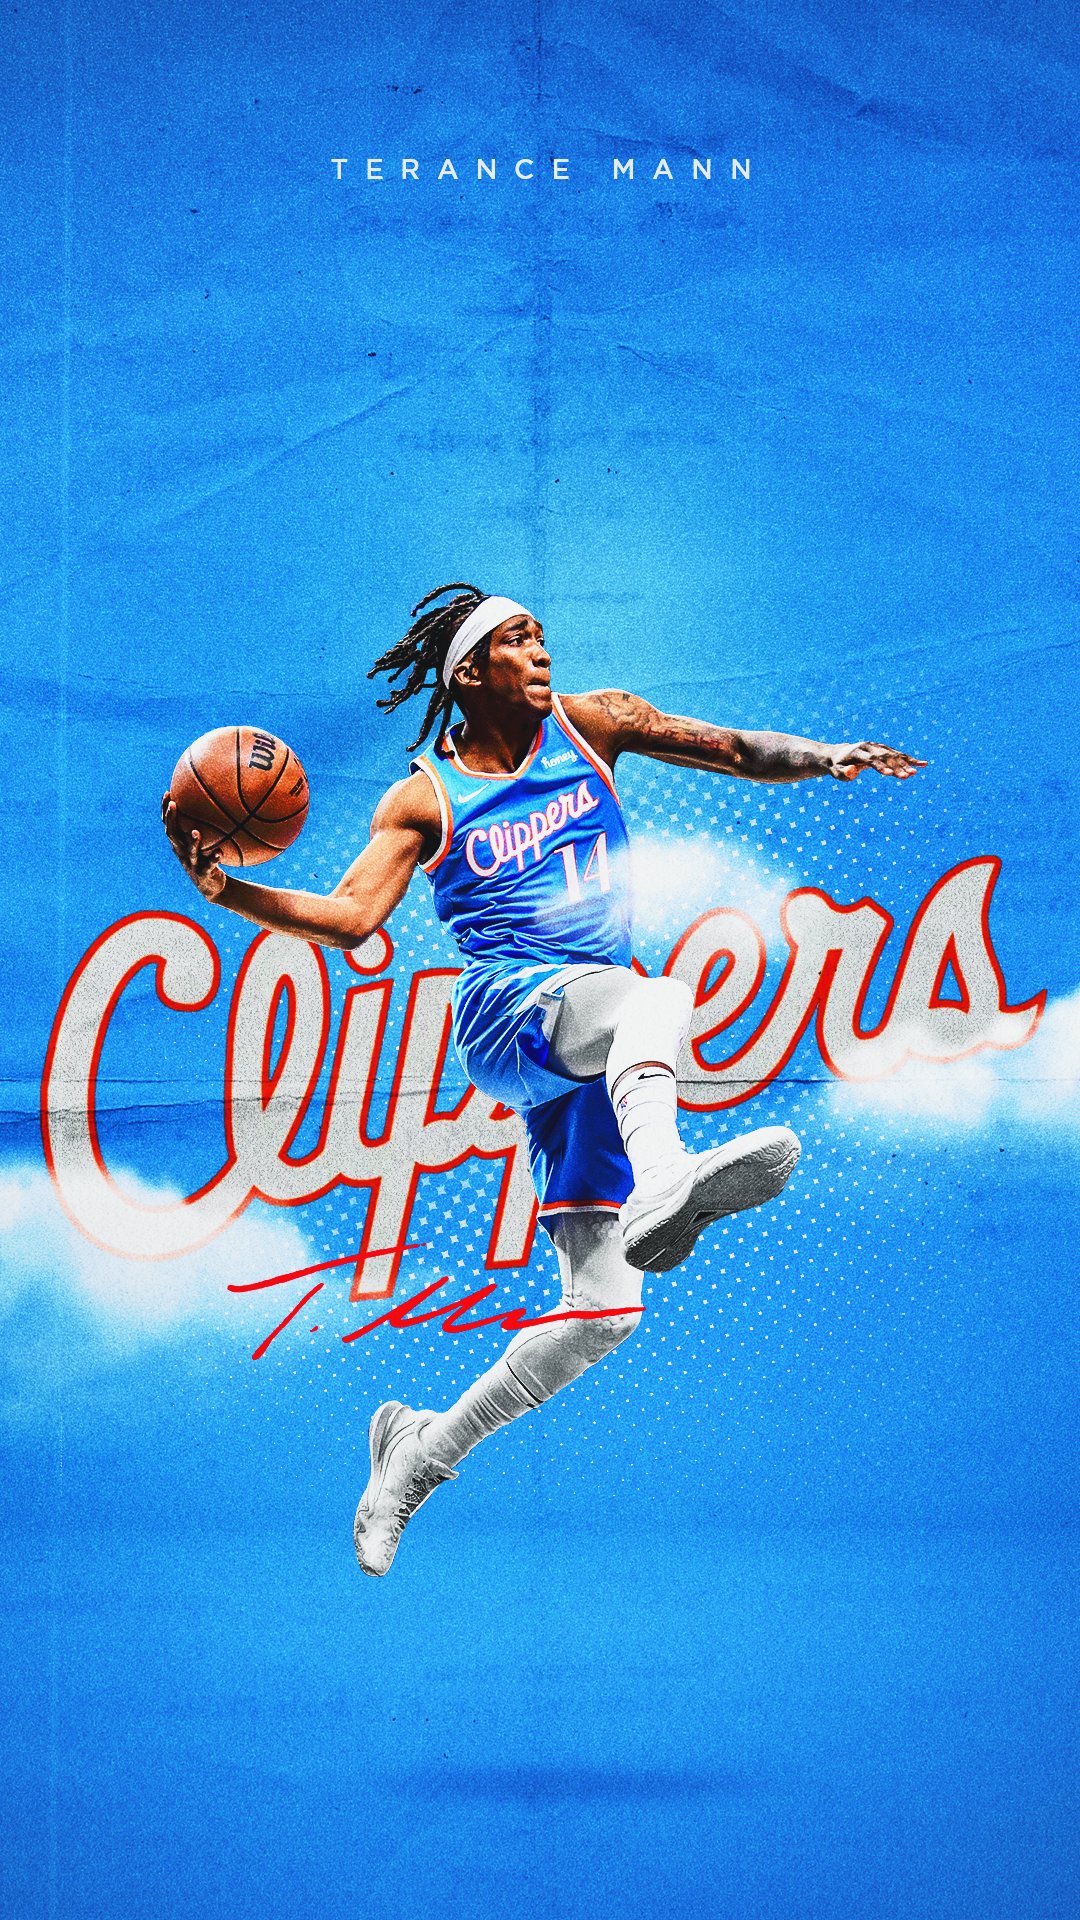 LA Clippers want 'em. We got 'em. Your phone's new wallpaper